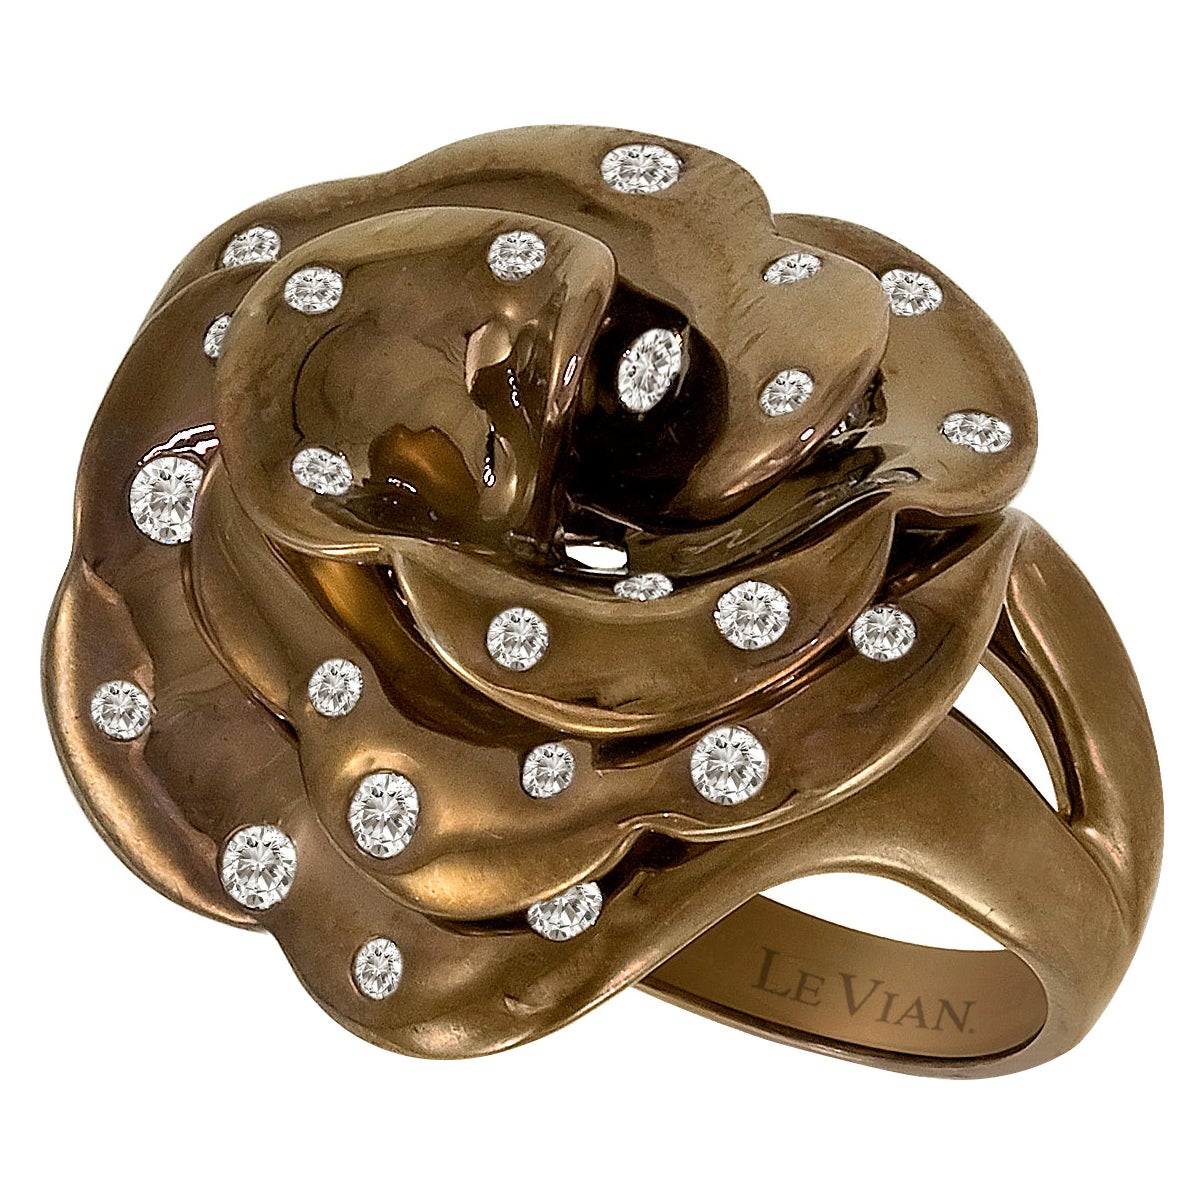 LeVian Bague fleur magnifique en or chocolat 14 carats avec diamants ronds H-I SI1-SI2